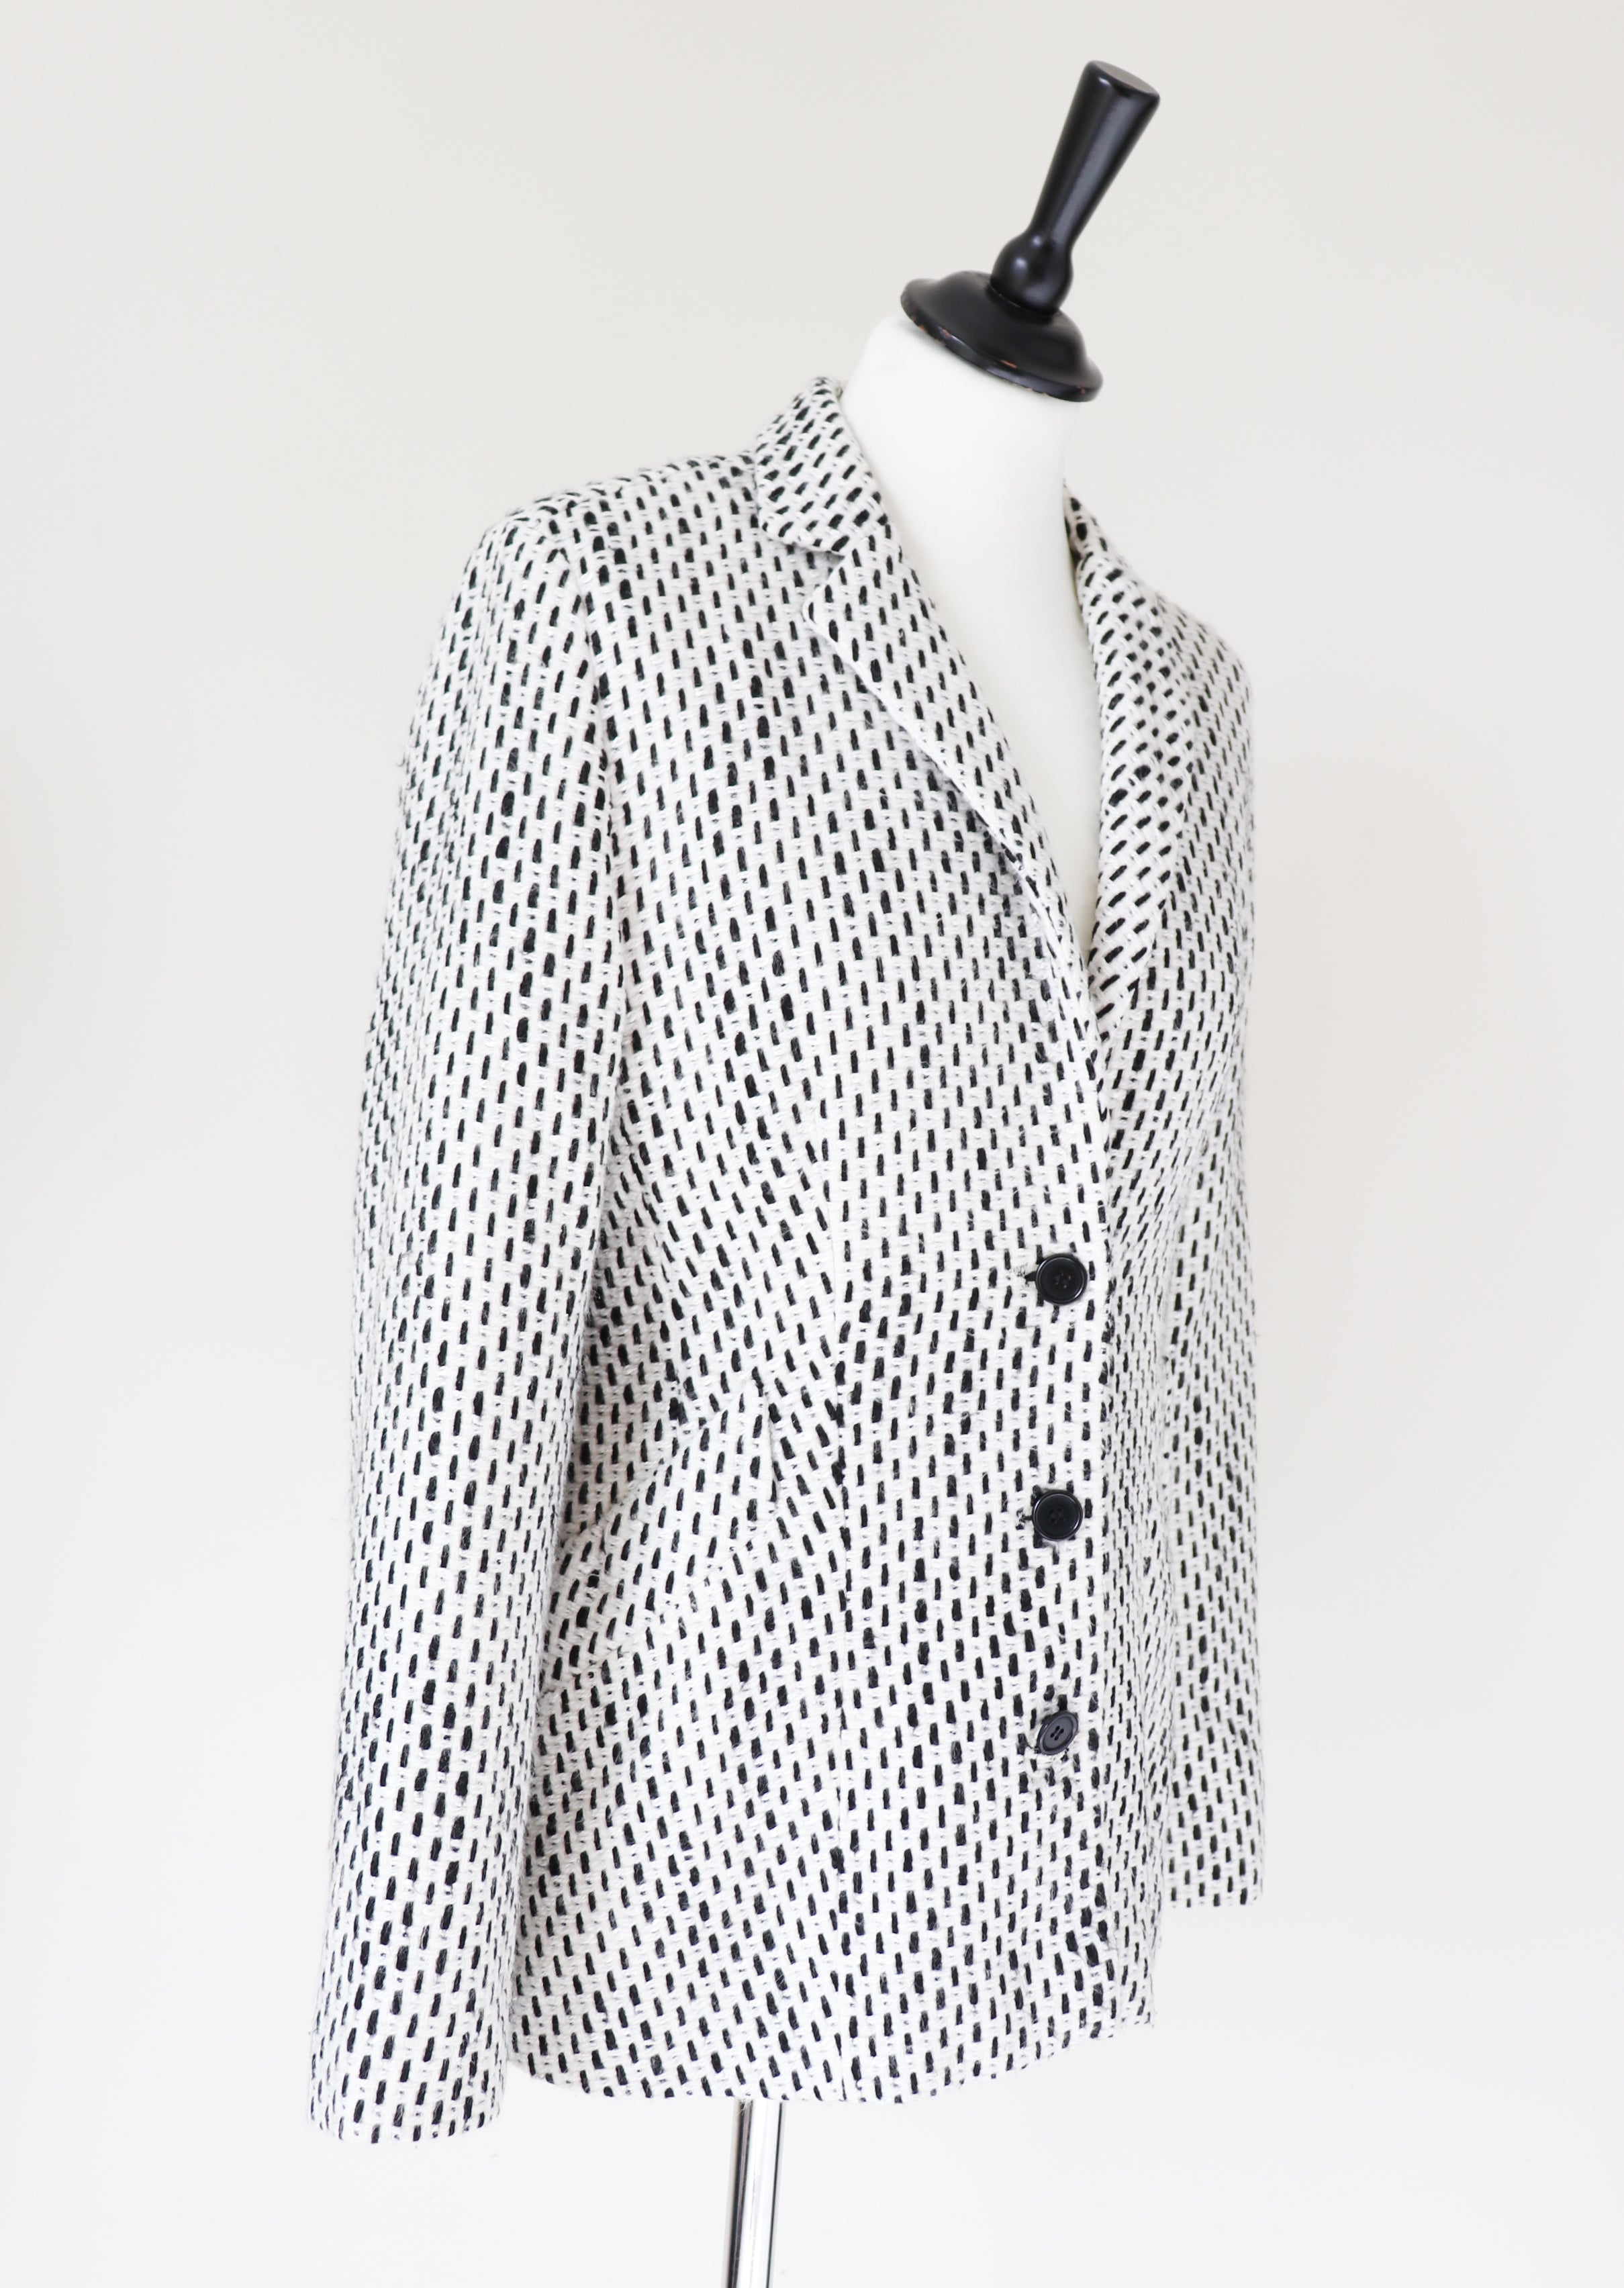 Woven Wool Jacket - Sigrid Schmidbauer - Ivory White / Black - S / UK 10